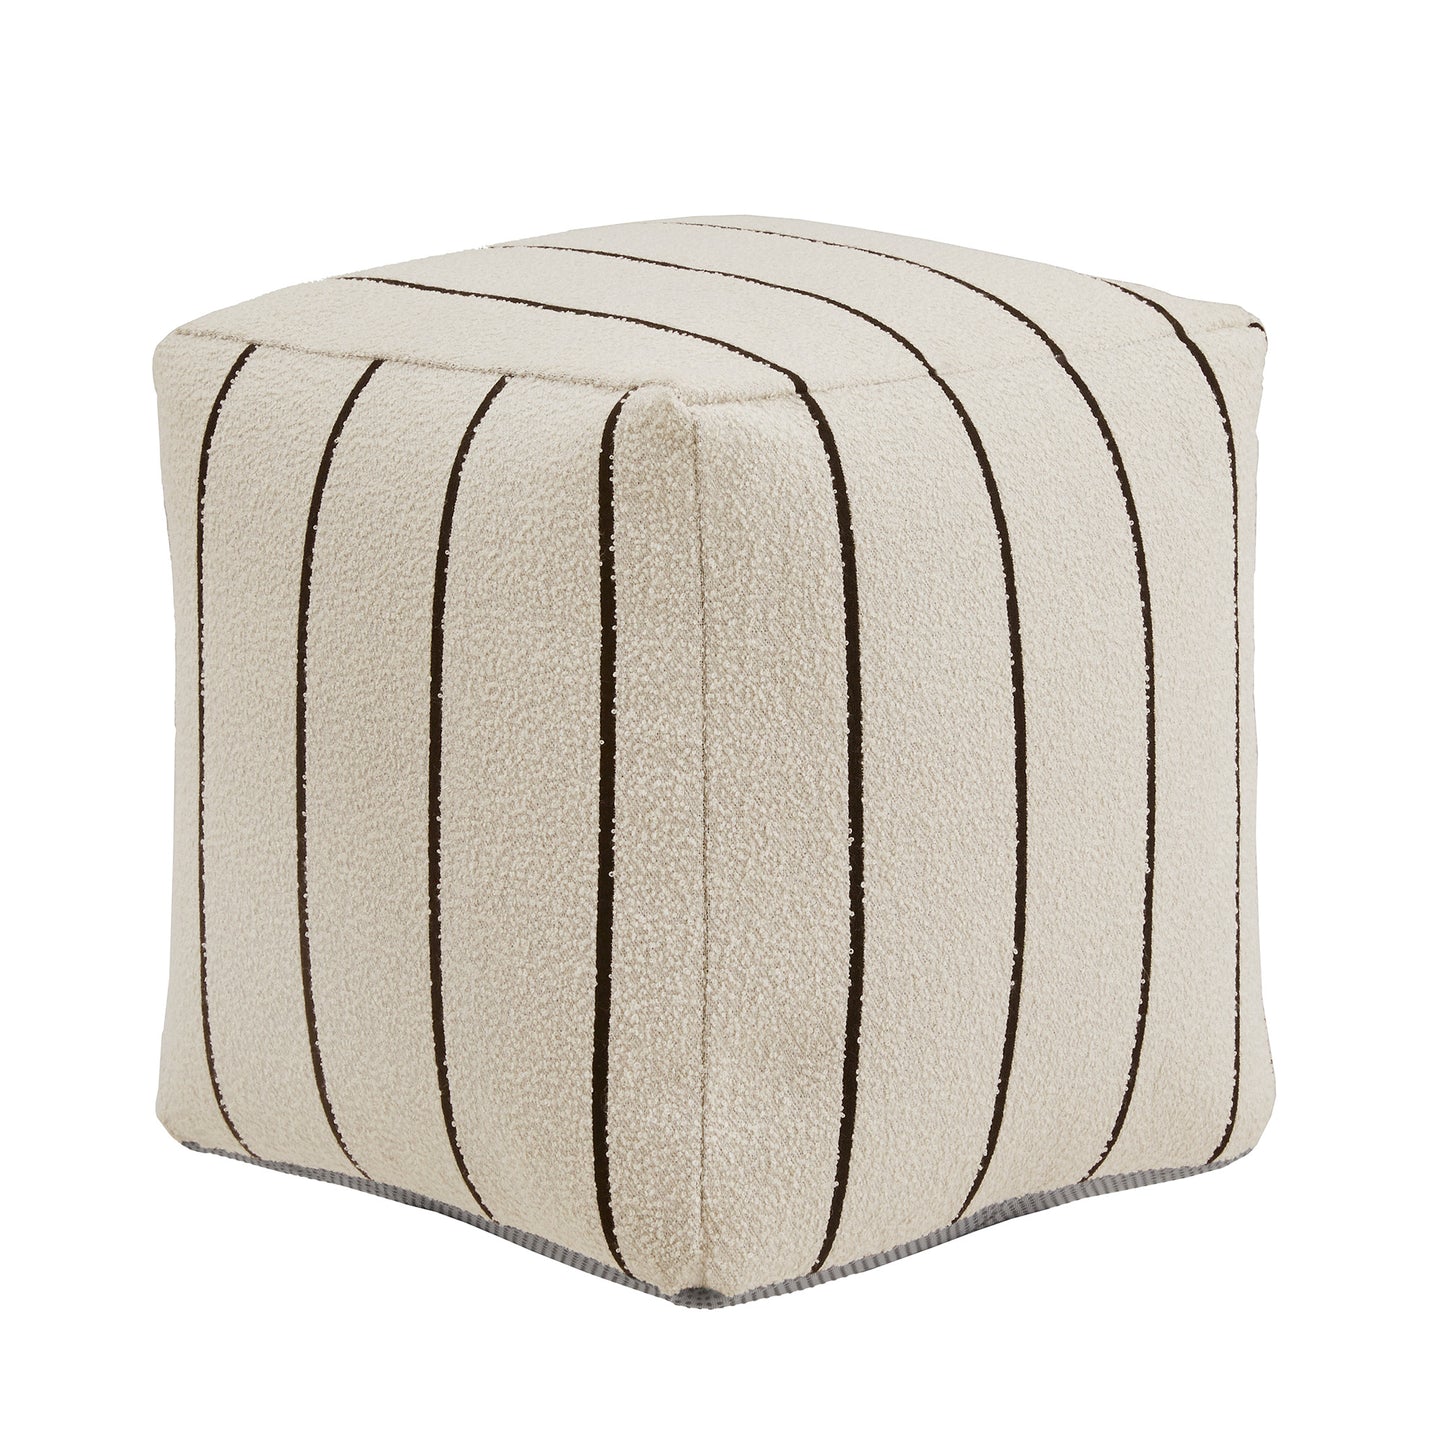 Upholstered Square Pouf Ottoman - Ivory & Black Stripe Pattern Fabric